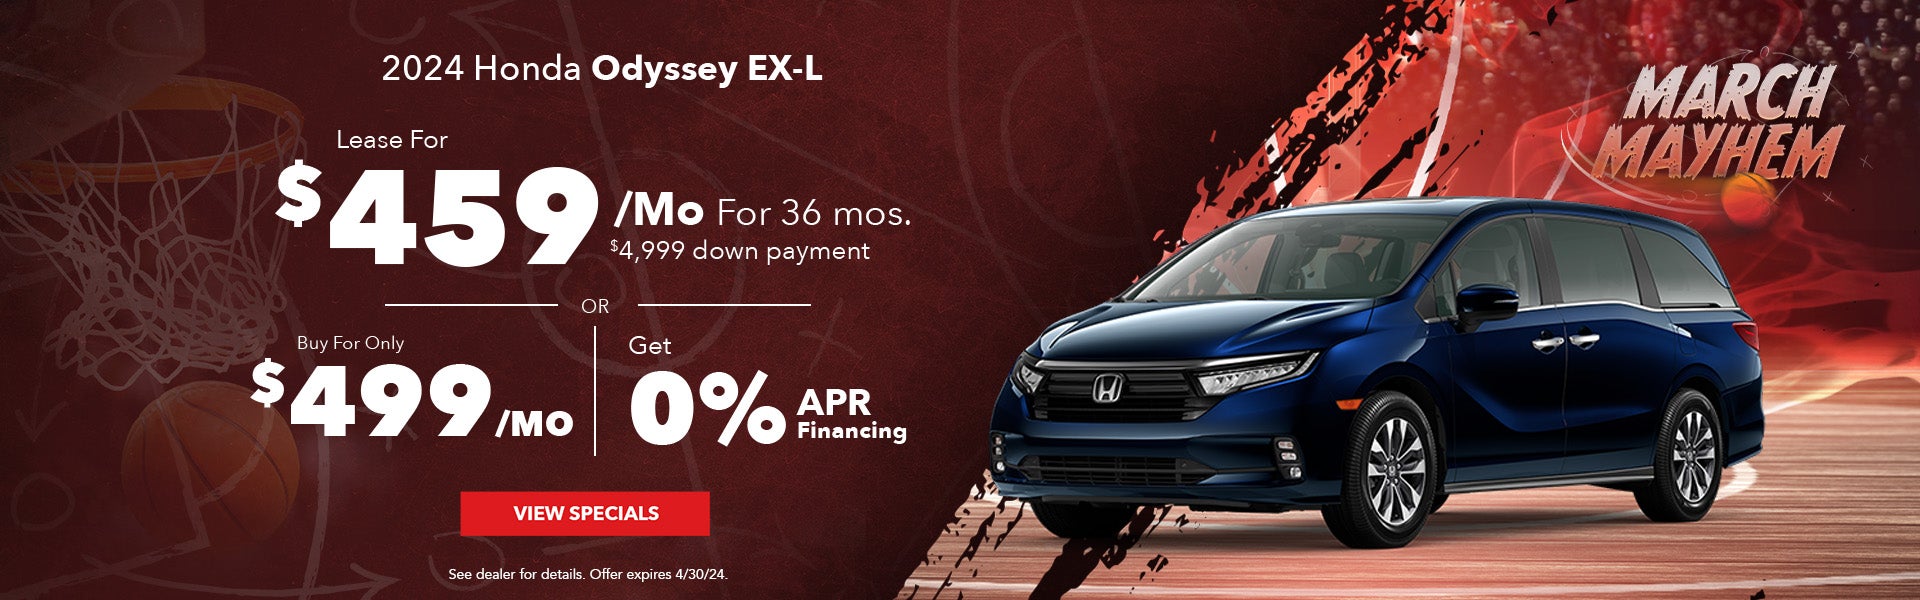 New Honda Odyssey EX-L Special